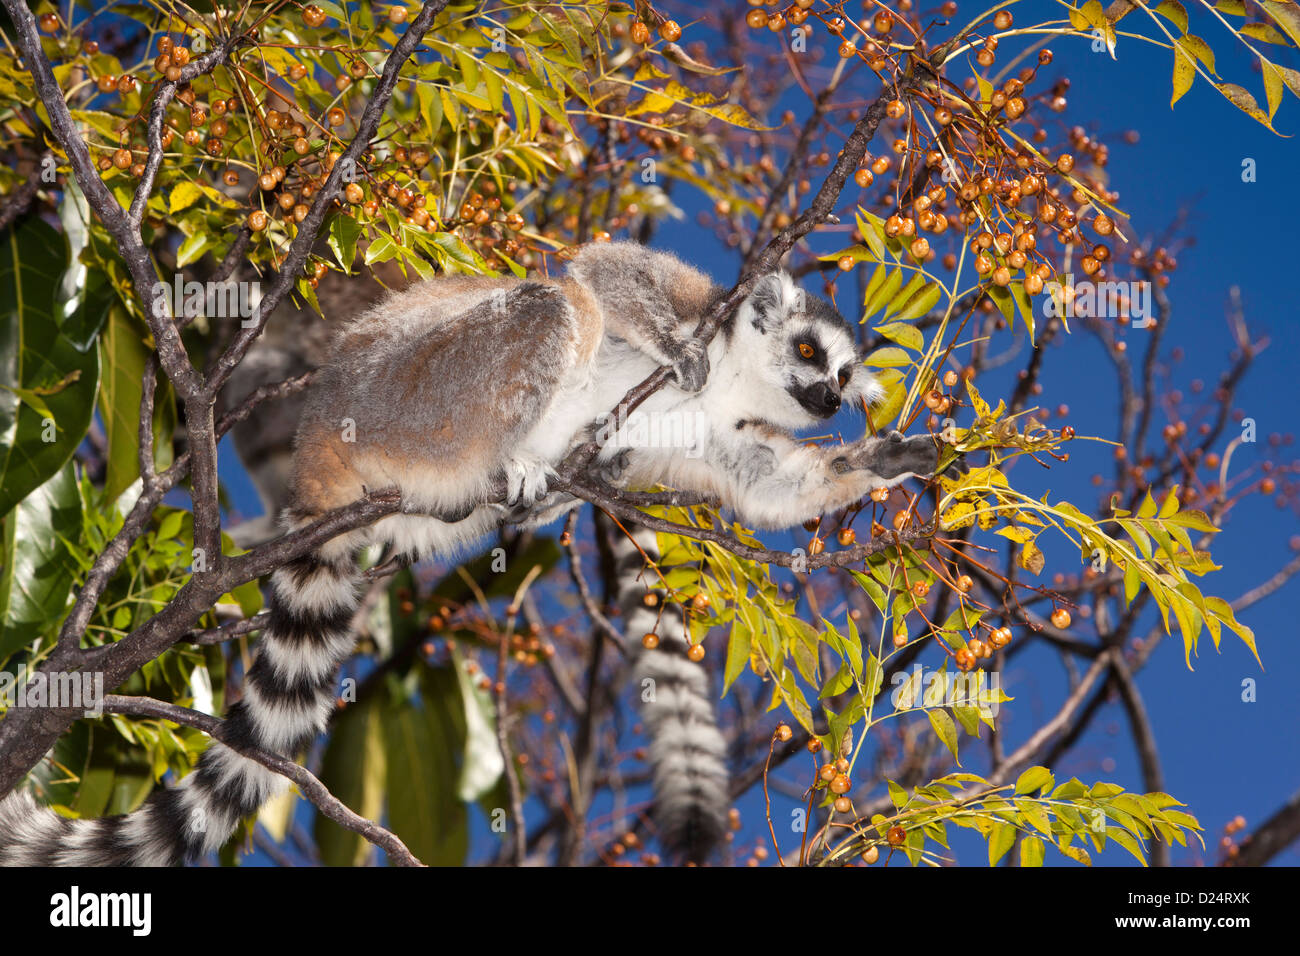 Madagascar, Ambalavao, Reserve d’Anja, Ringtailed Lemurs, feeding on berries in lilla tree Stock Photo